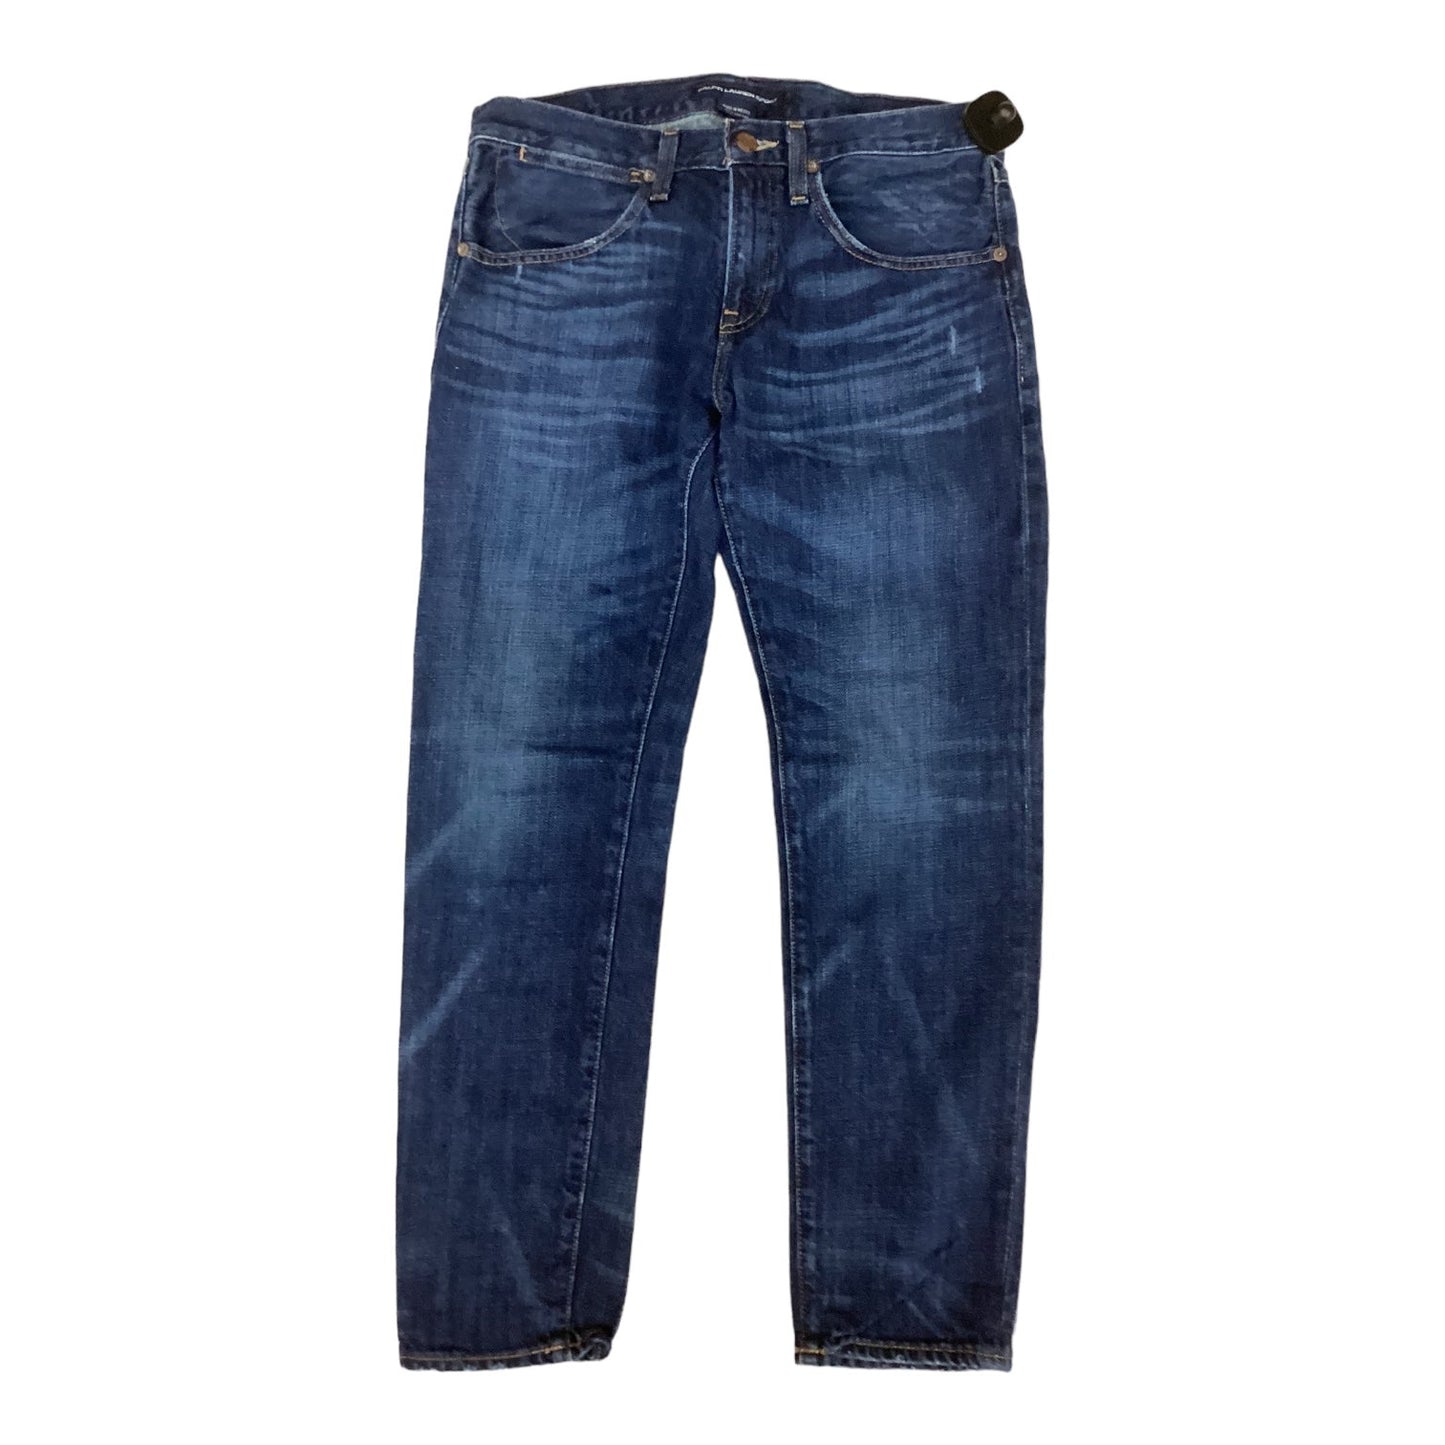 Jeans Skinny By Ralph Lauren  Size: 6